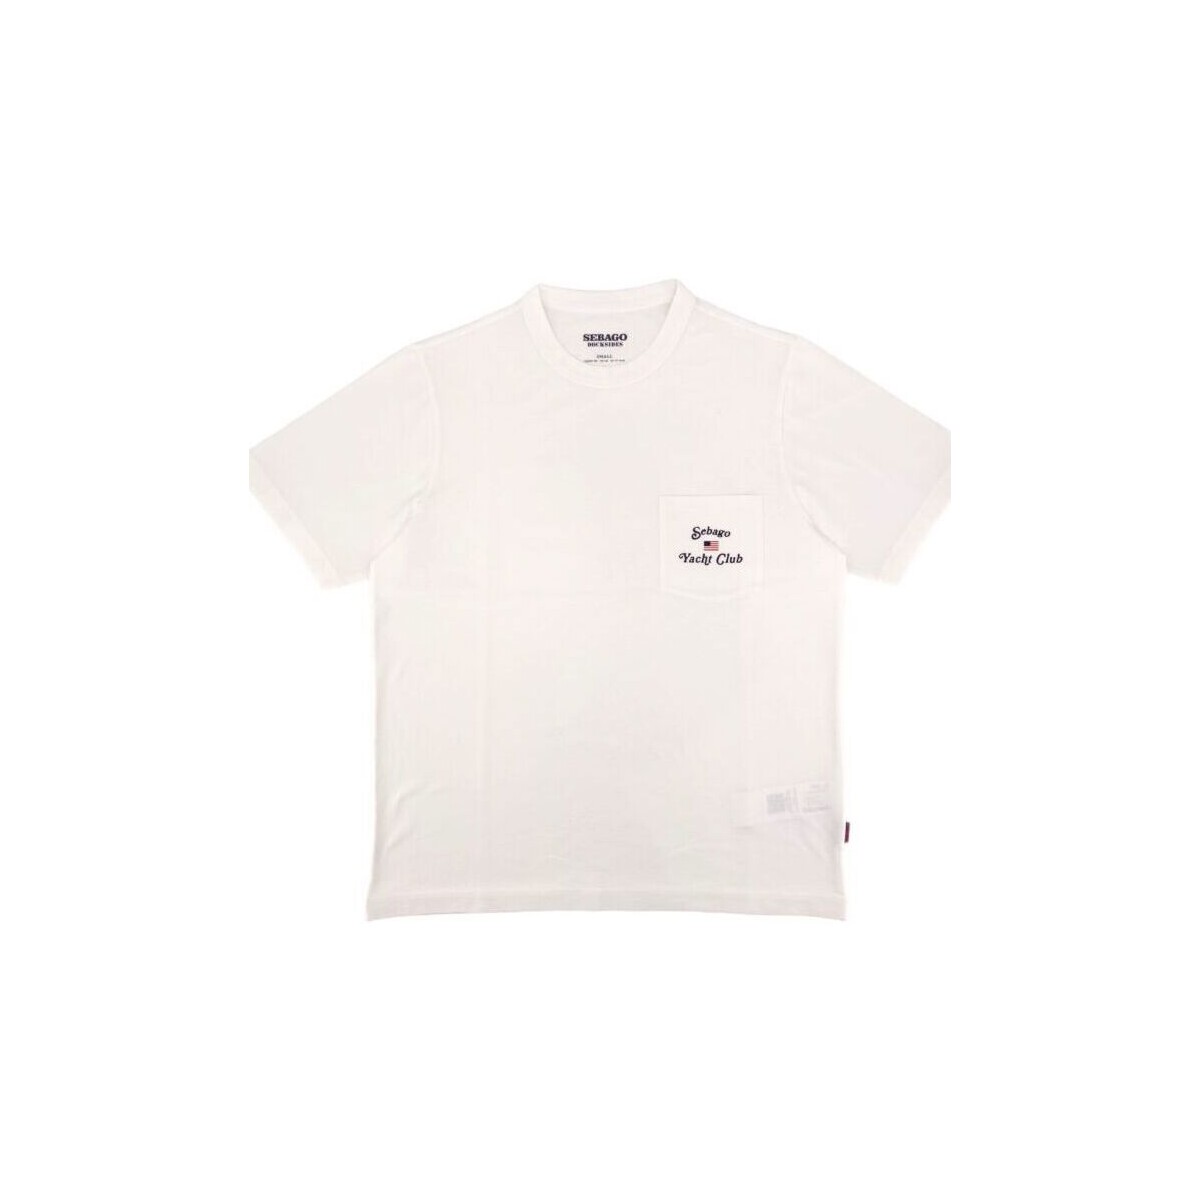 Abbigliamento Uomo T-shirt maniche corte Sebago T-shirt Howland Uomo White Natural Bianco